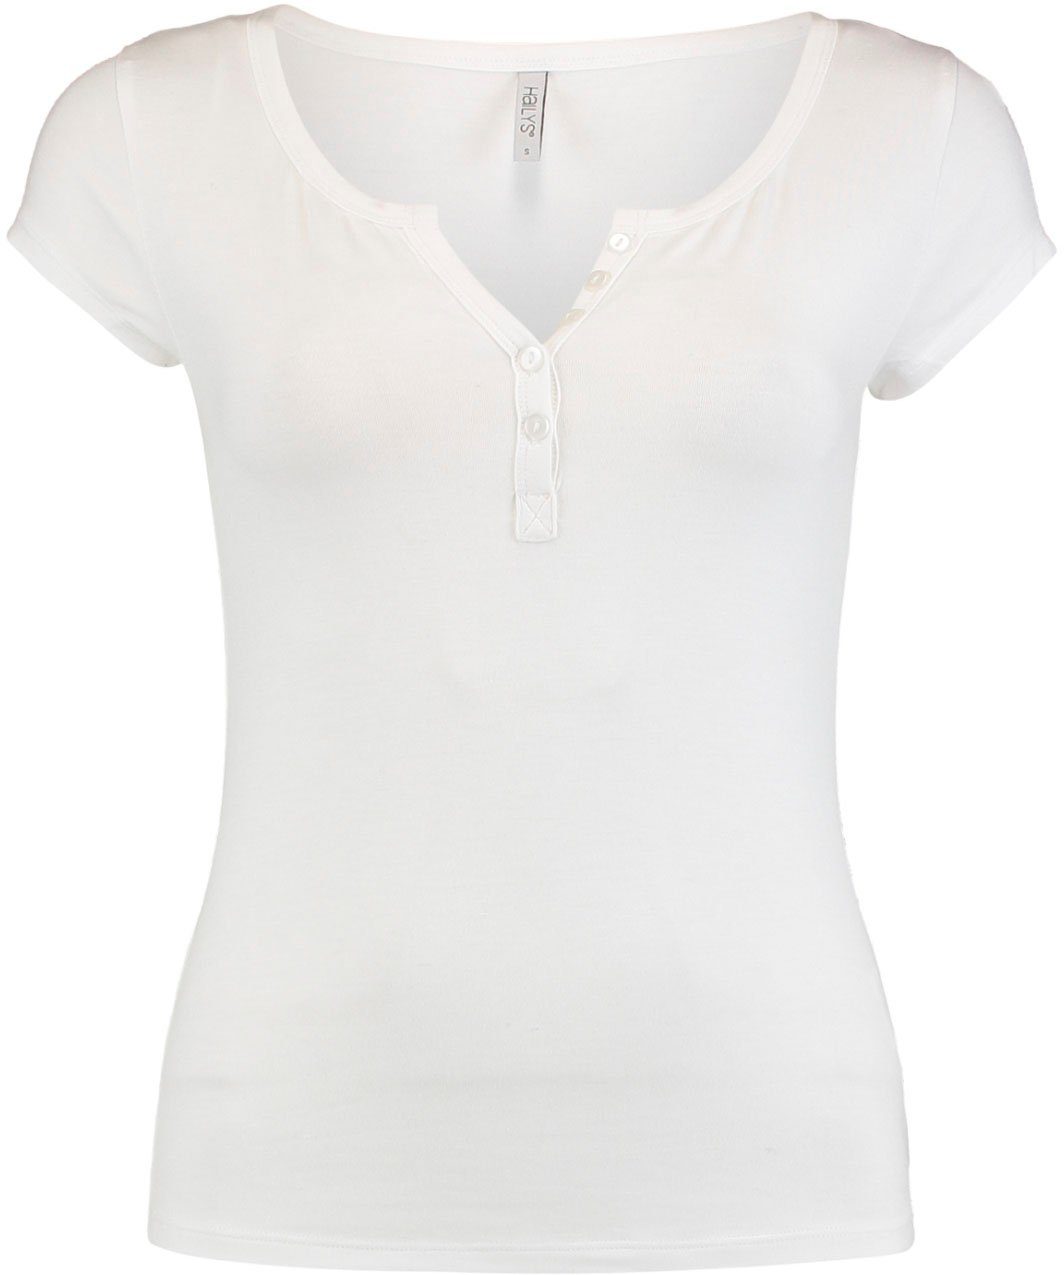 white TP Henna T-Shirt HaILY’S